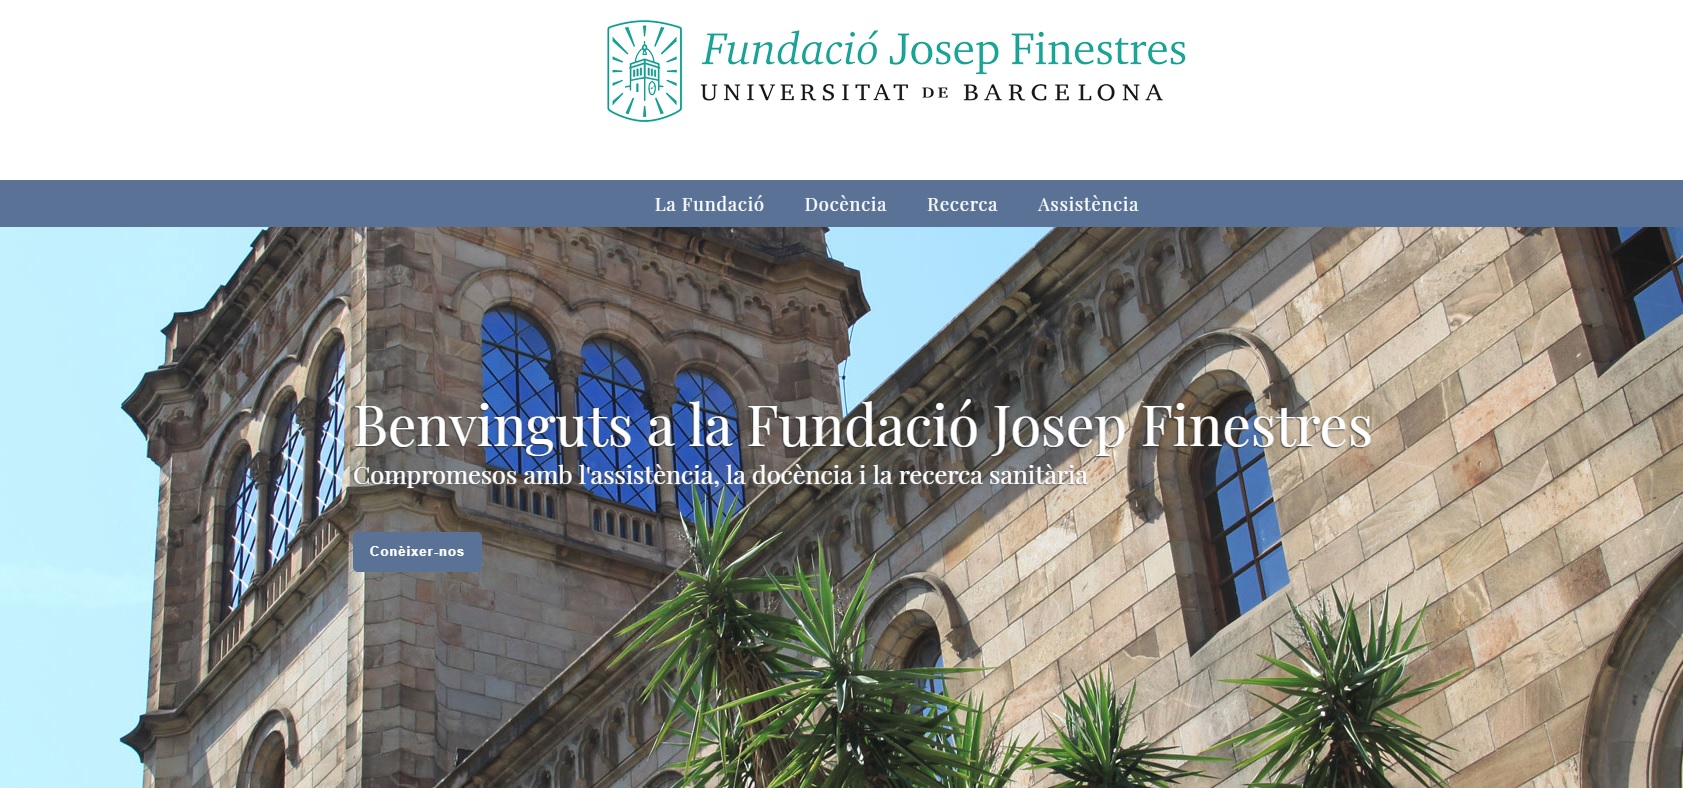 La Fundació Josep Finestres, el Hospital Odontològic UB y el Hospital Podològic UB renuevan sus páginas web.